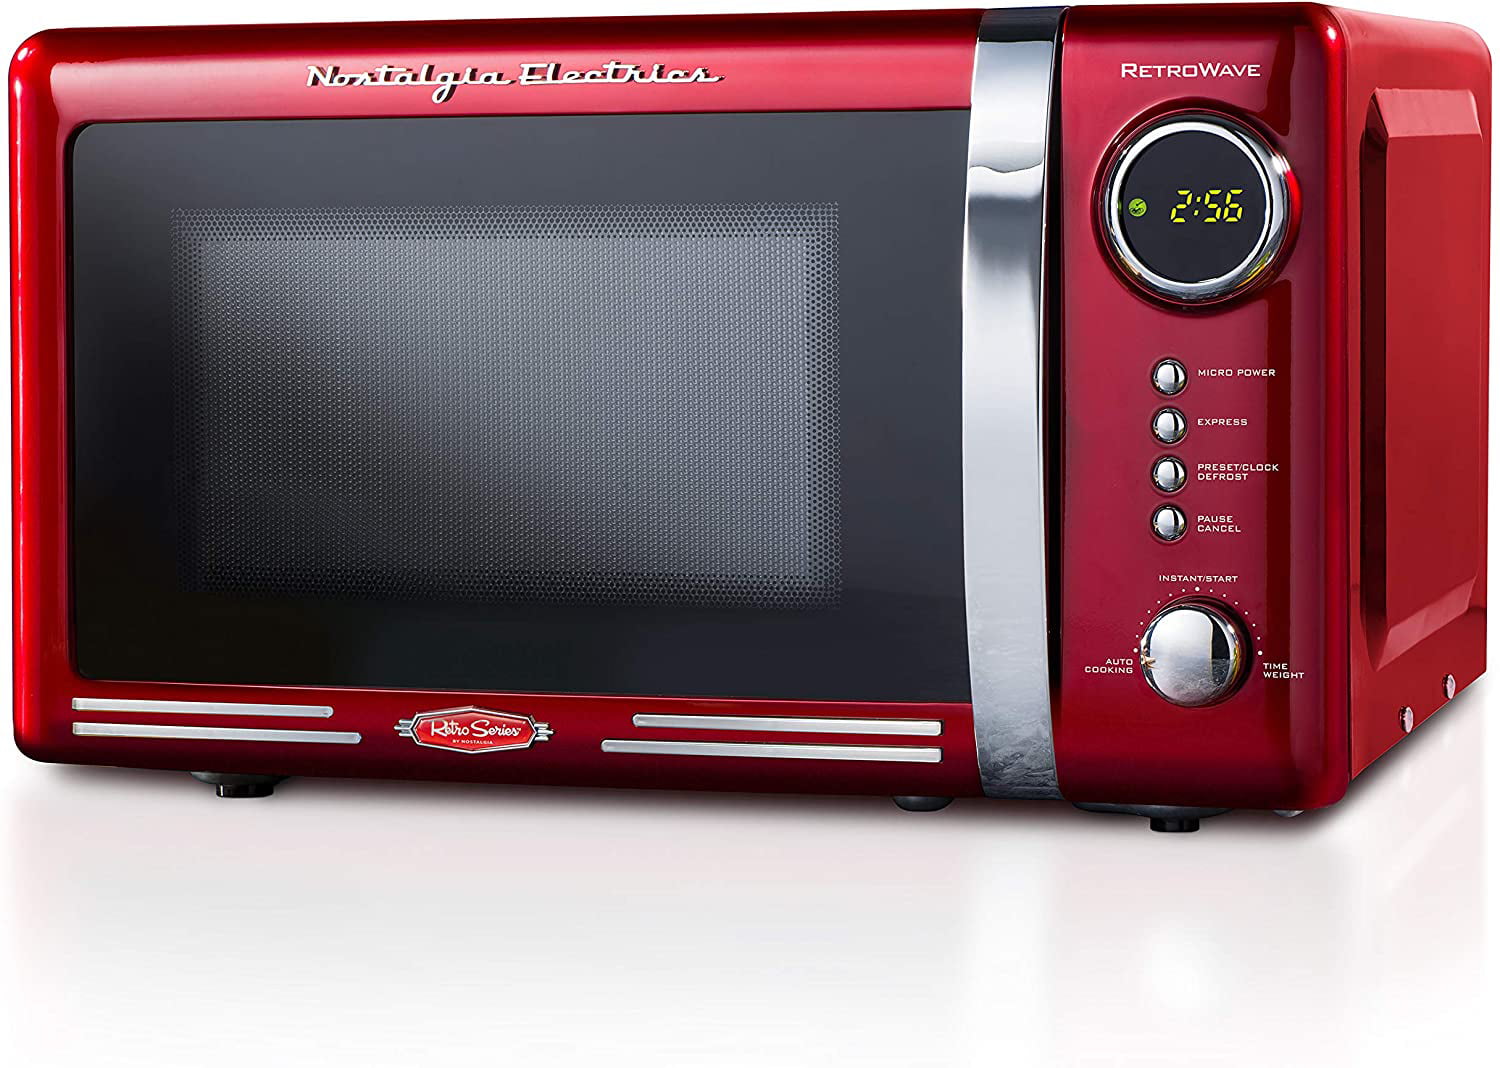 Nostalgia RMO7RR Retro 0.7 cu ft 700-Watt Countertop Microwave Oven, 12